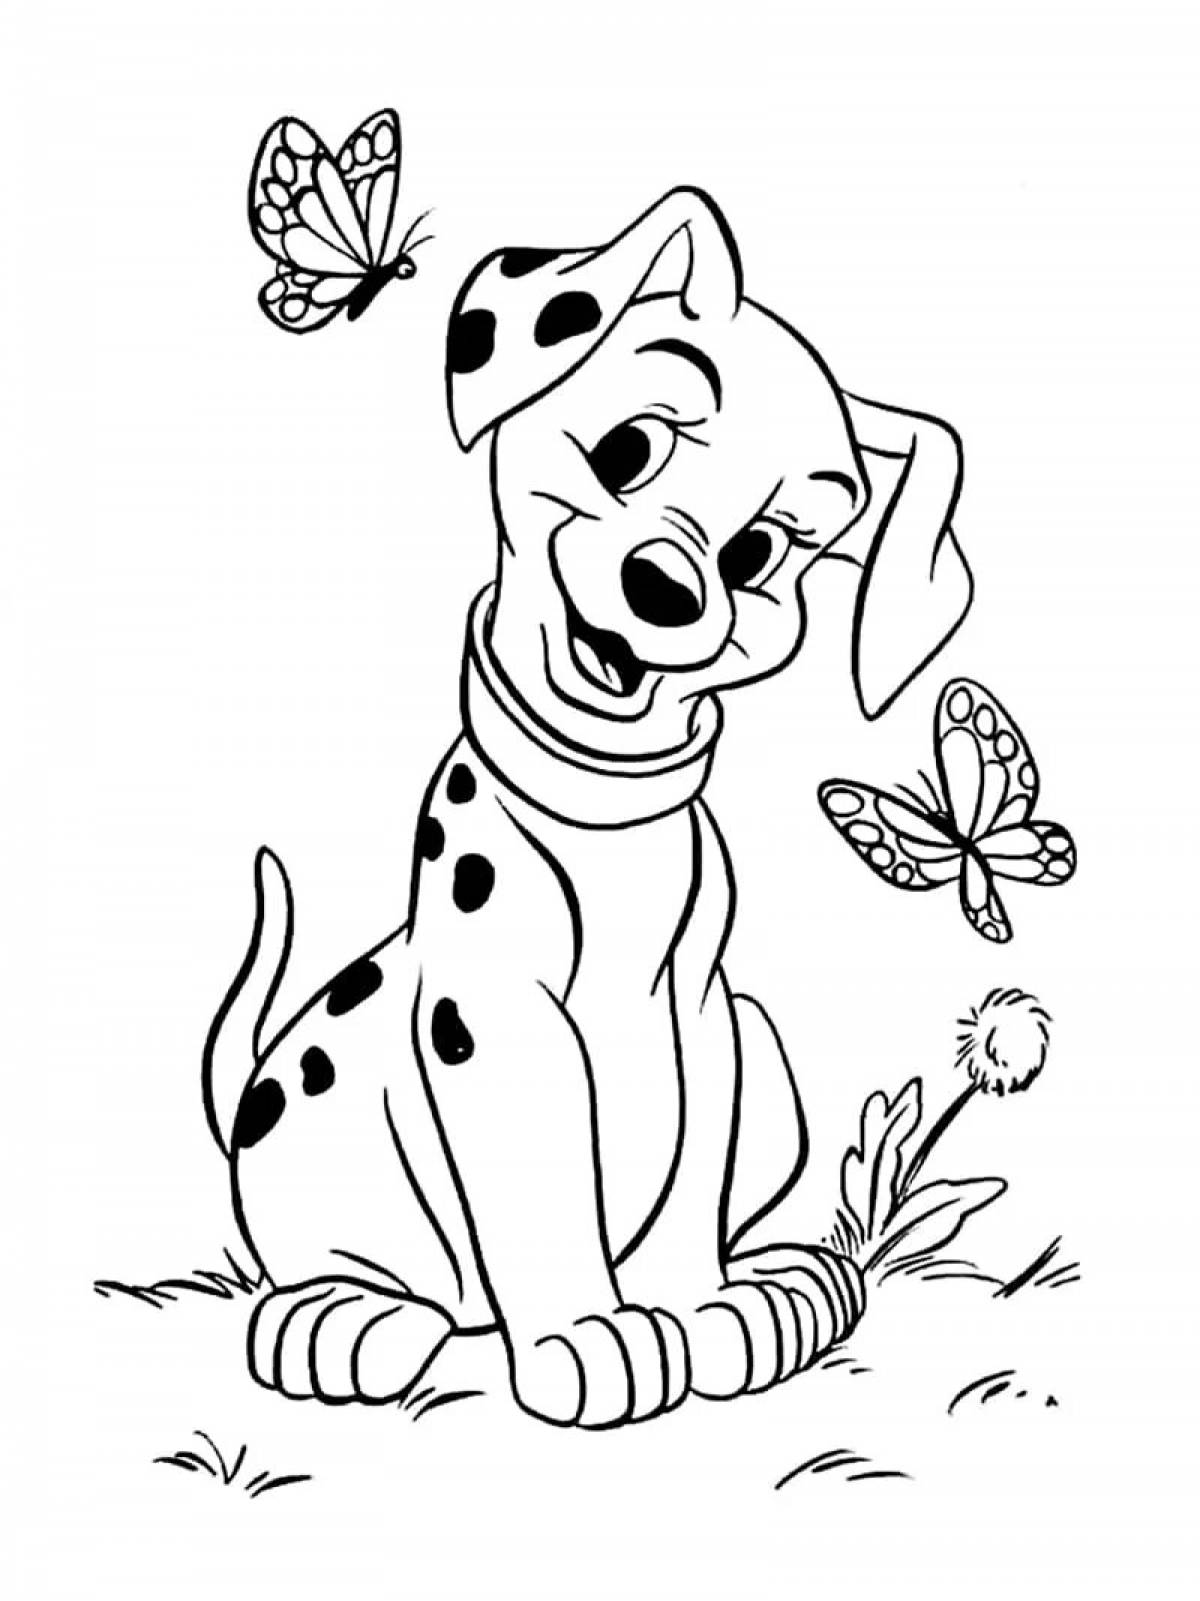 Amazing Dalmatian coloring book for kids